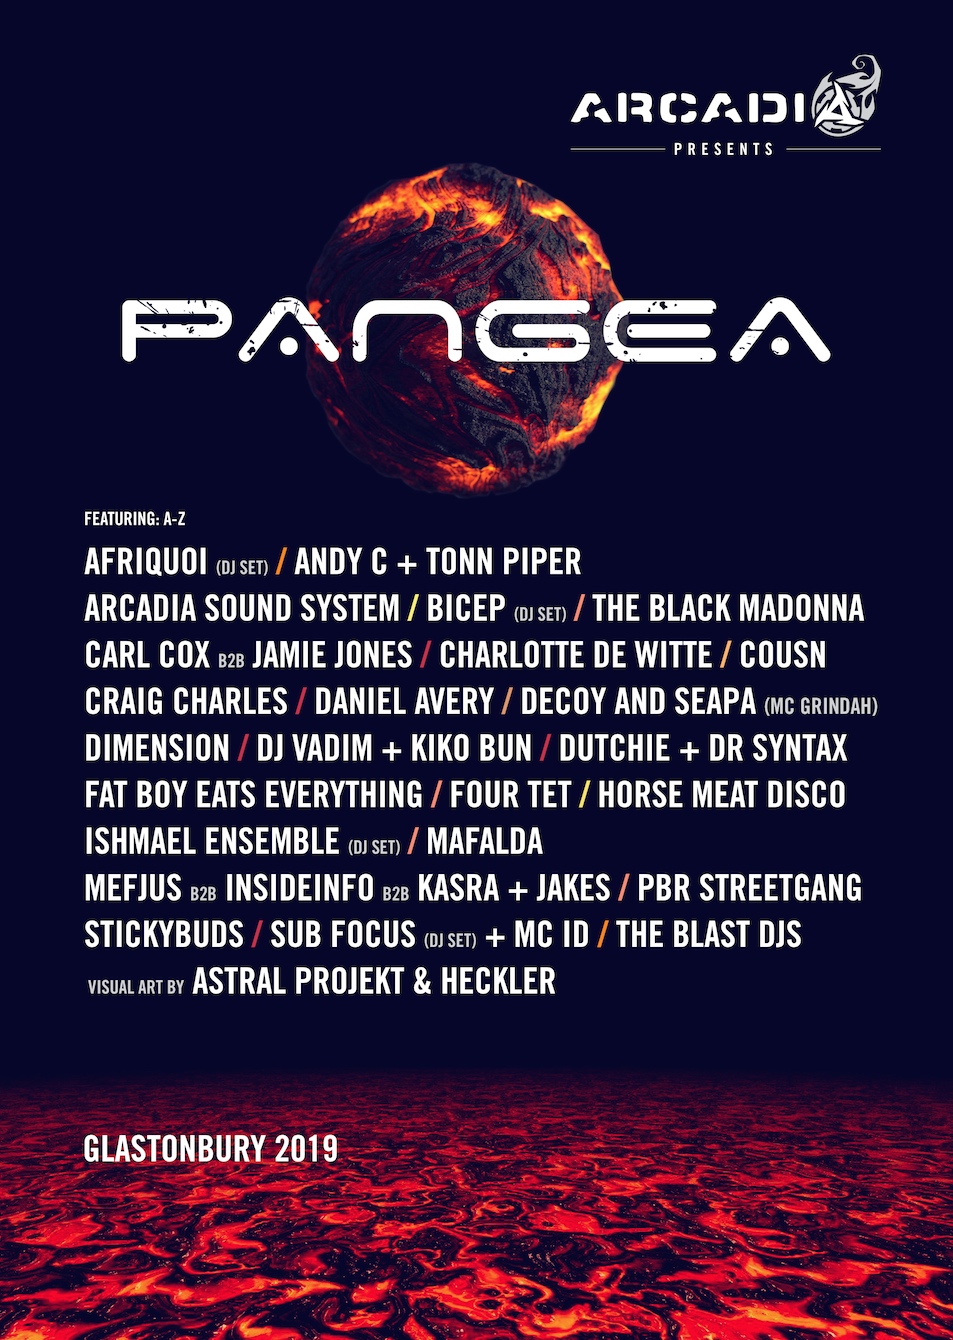 Arcadia's Pangea 2019